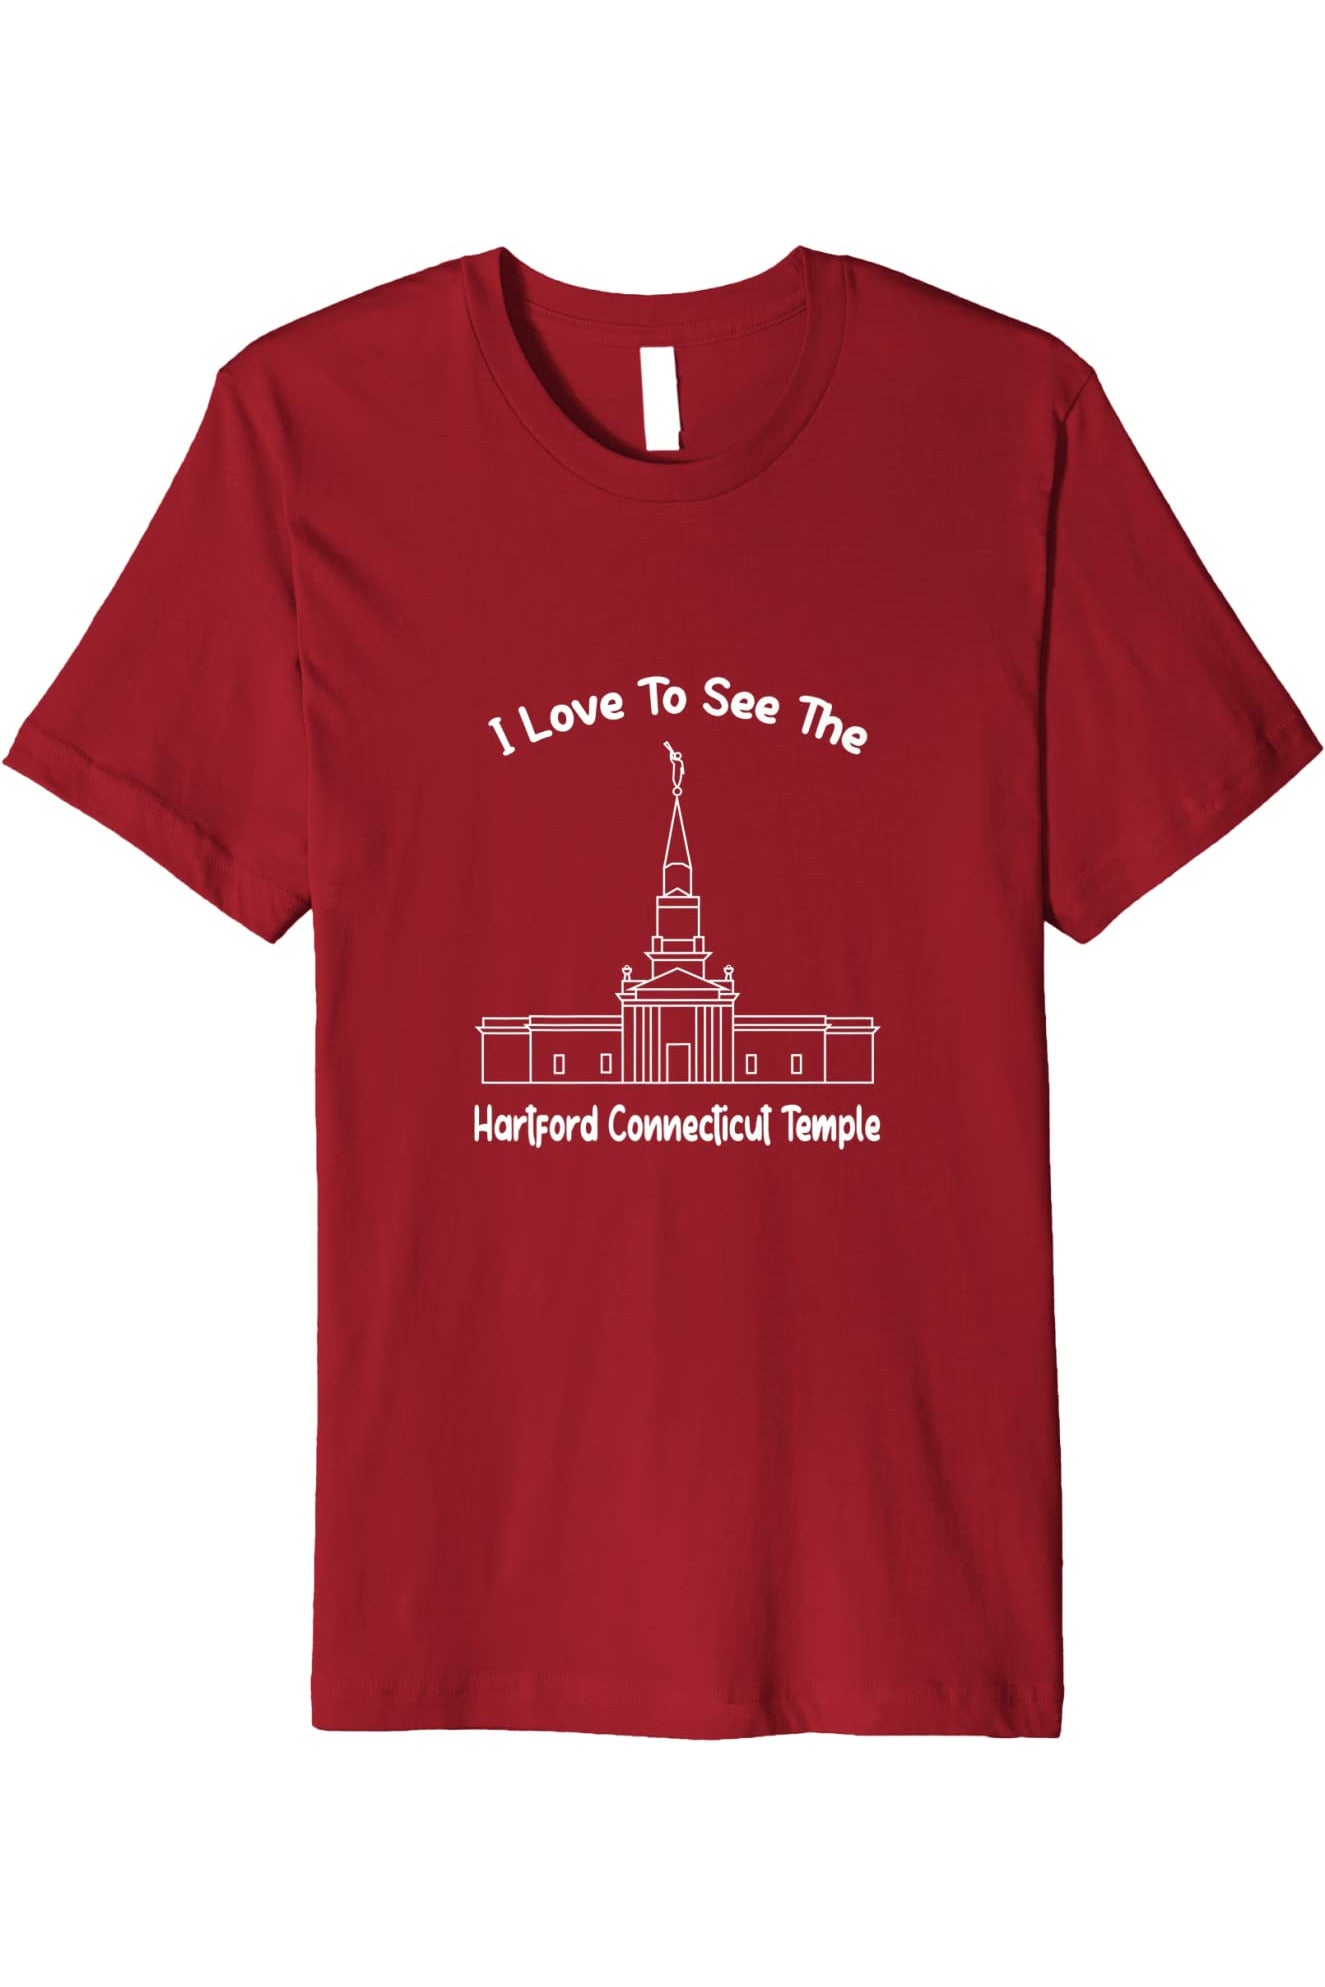 Hartford Connecticut Temple T-Shirt - Premium - Primary Style (English) US